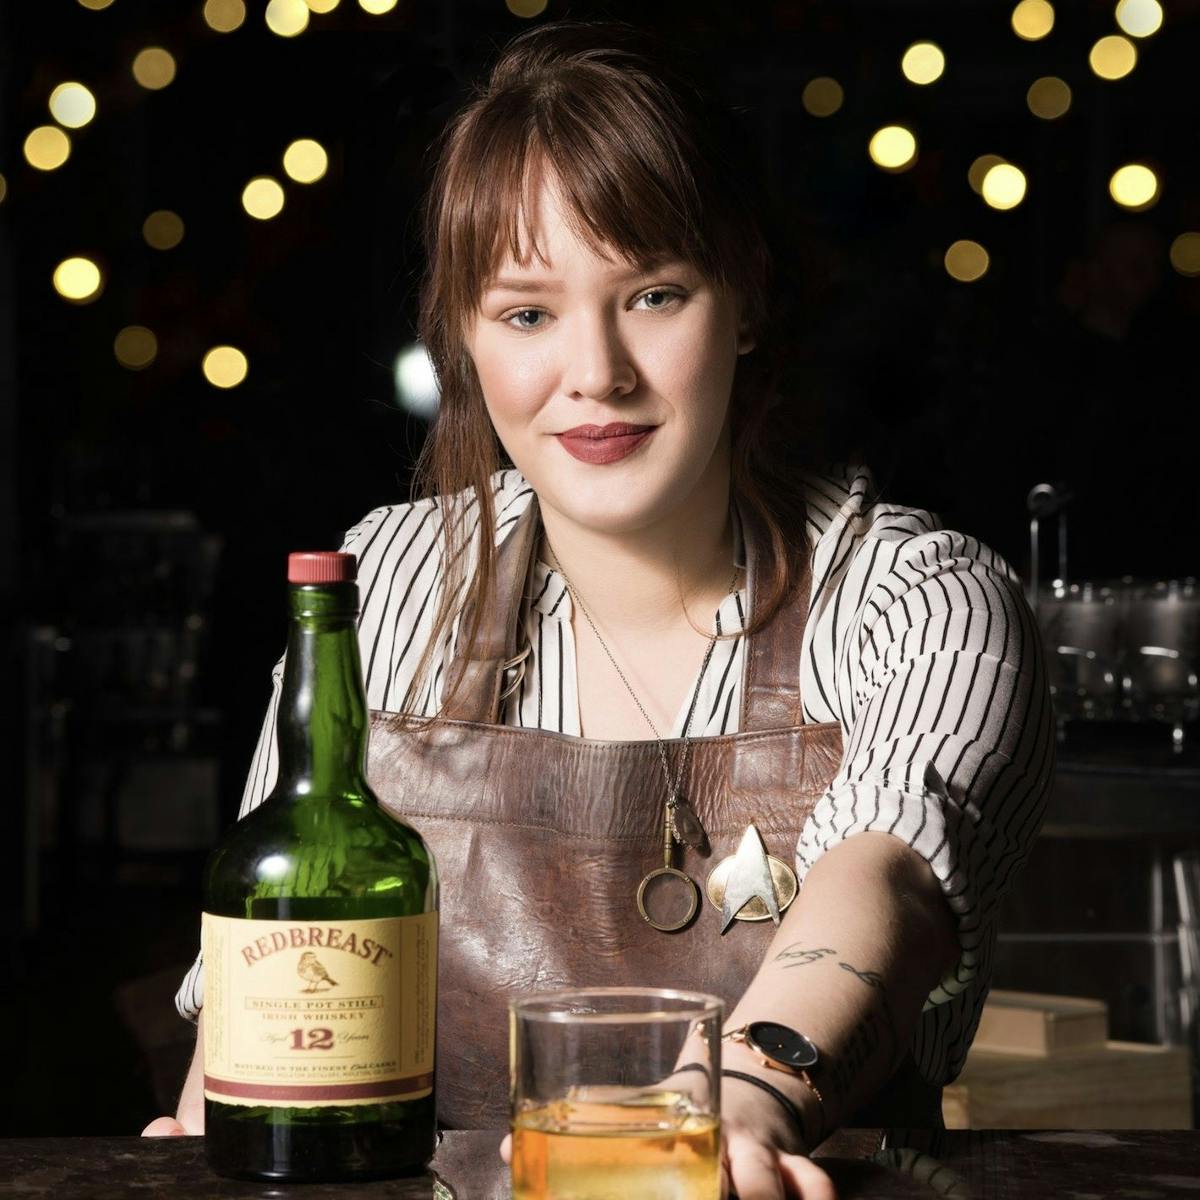 A woman serving a cocktail